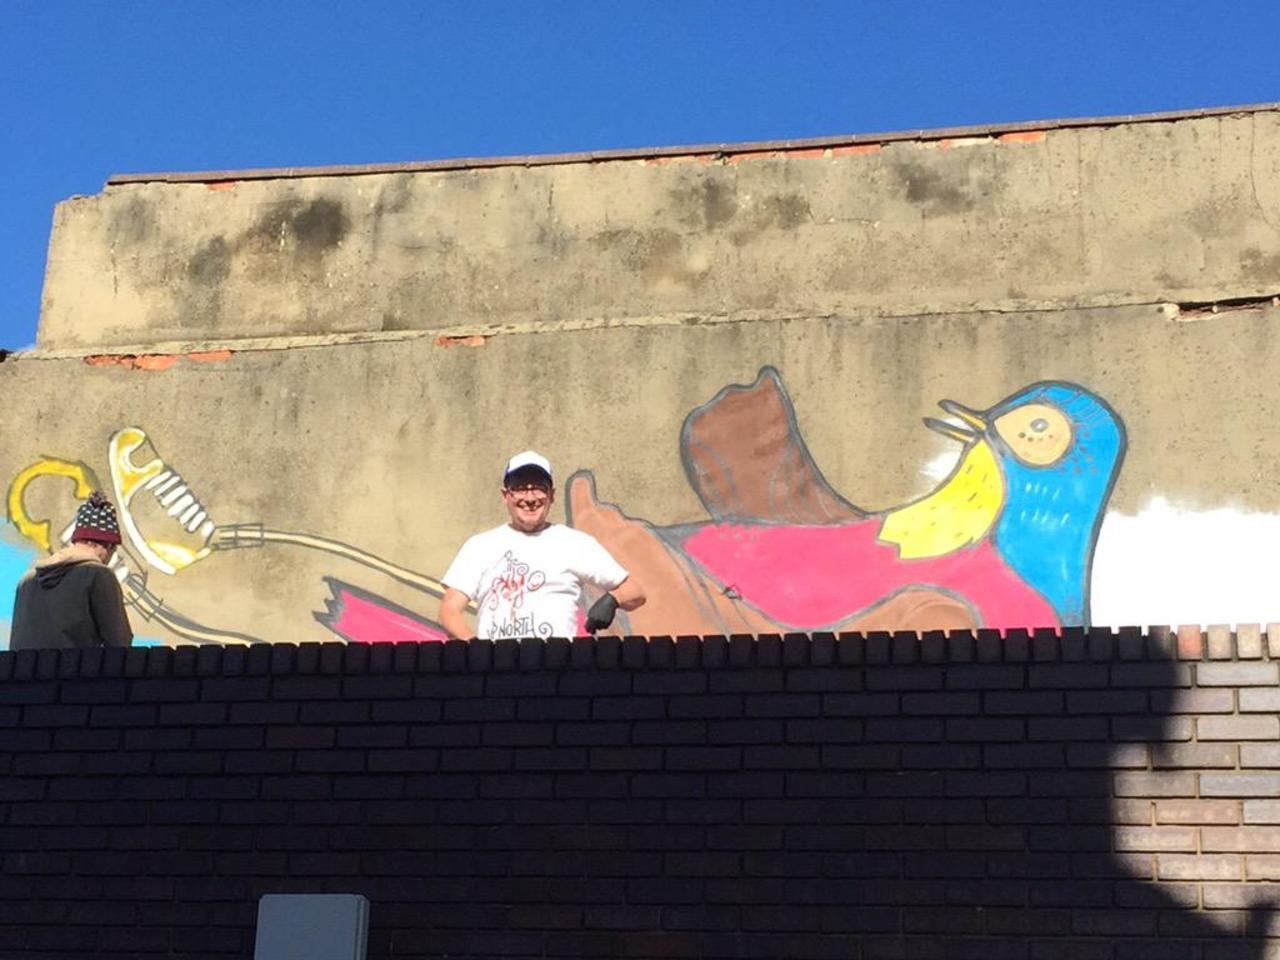 Caught this guy spraying more birds in #Middlesbrough #boro #art #graffiti #streetart @iambobzilla http://t.co/QrOSvu4VxU